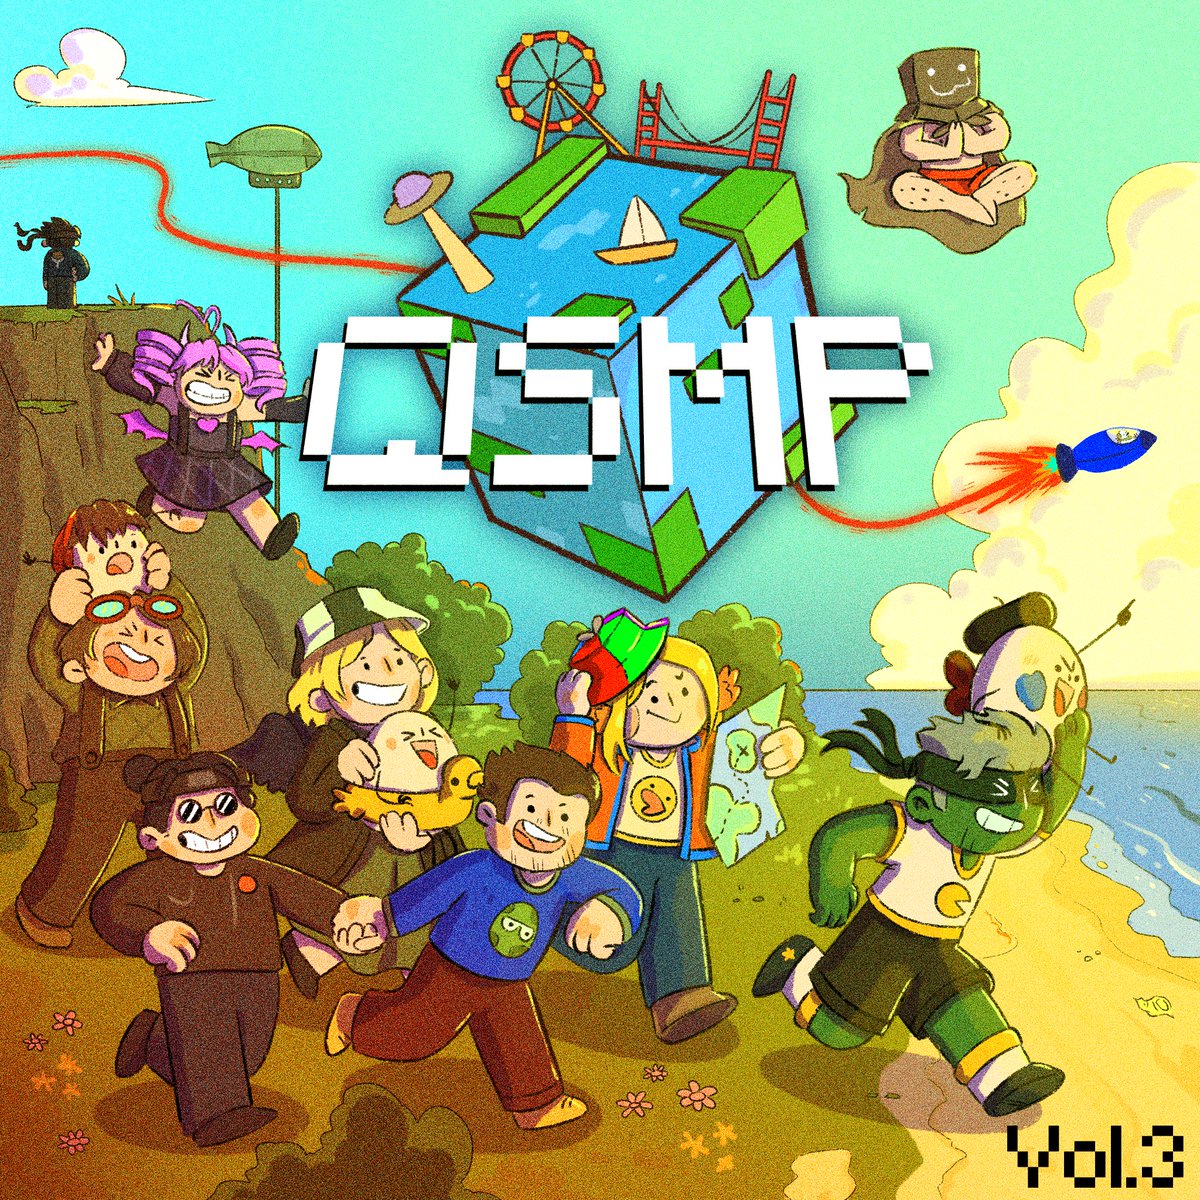 Artwork for volume 3 of @FasterOfficial’s remix on qsmp! #qsmp #qsmpfanart